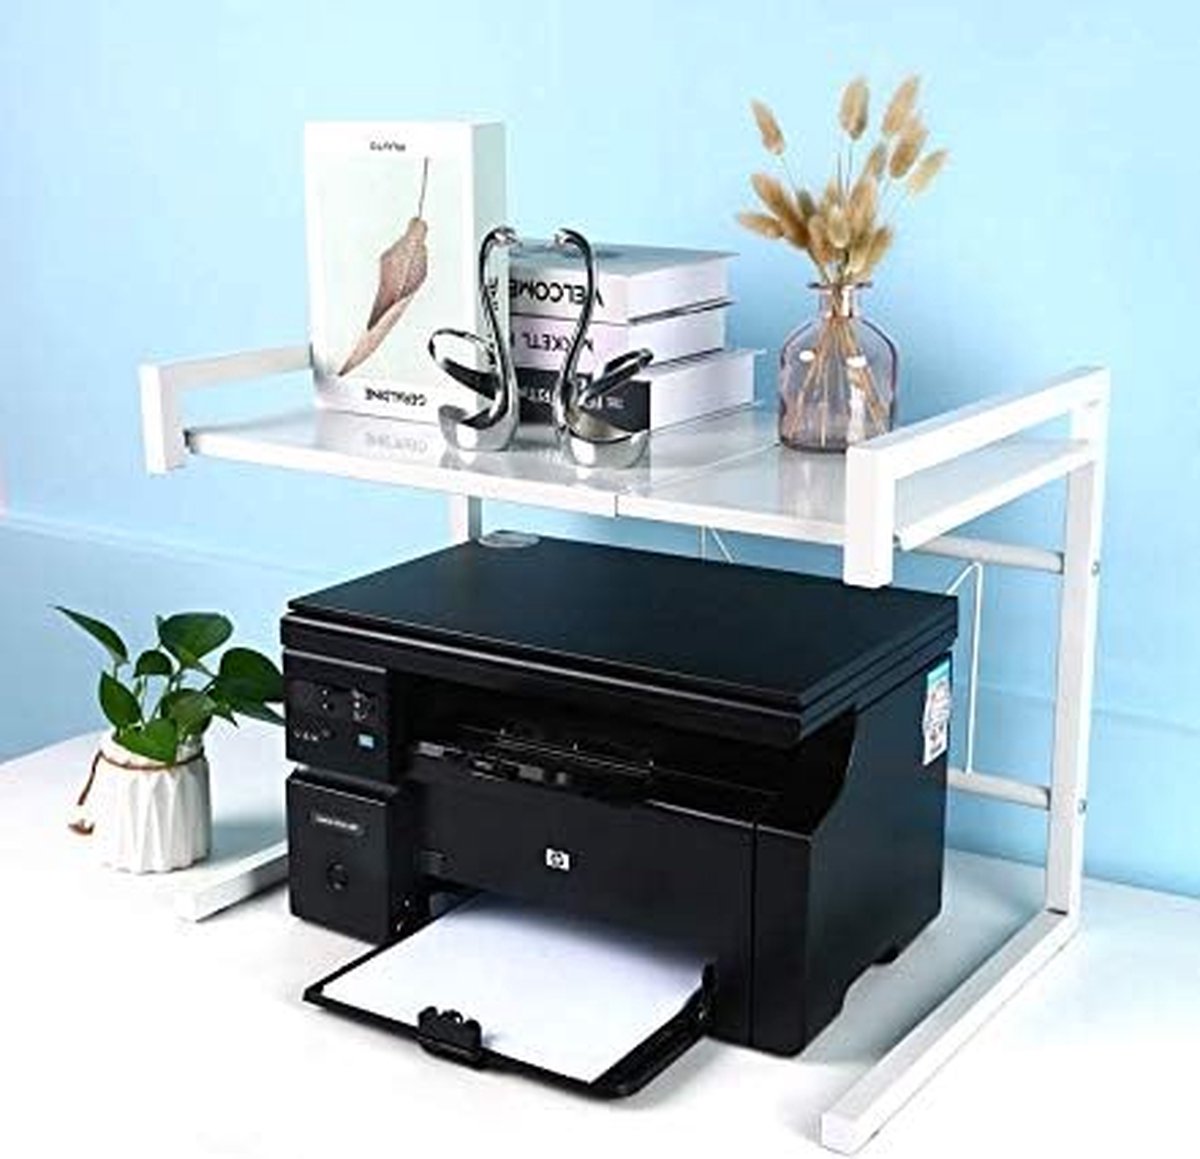 Printerhouder, standaard, printerstandaard, houder van metaal, organizer, bureaurek voor printers, ideaal voor kantoor en thuis, in de breedte uittrekbaar (modern)